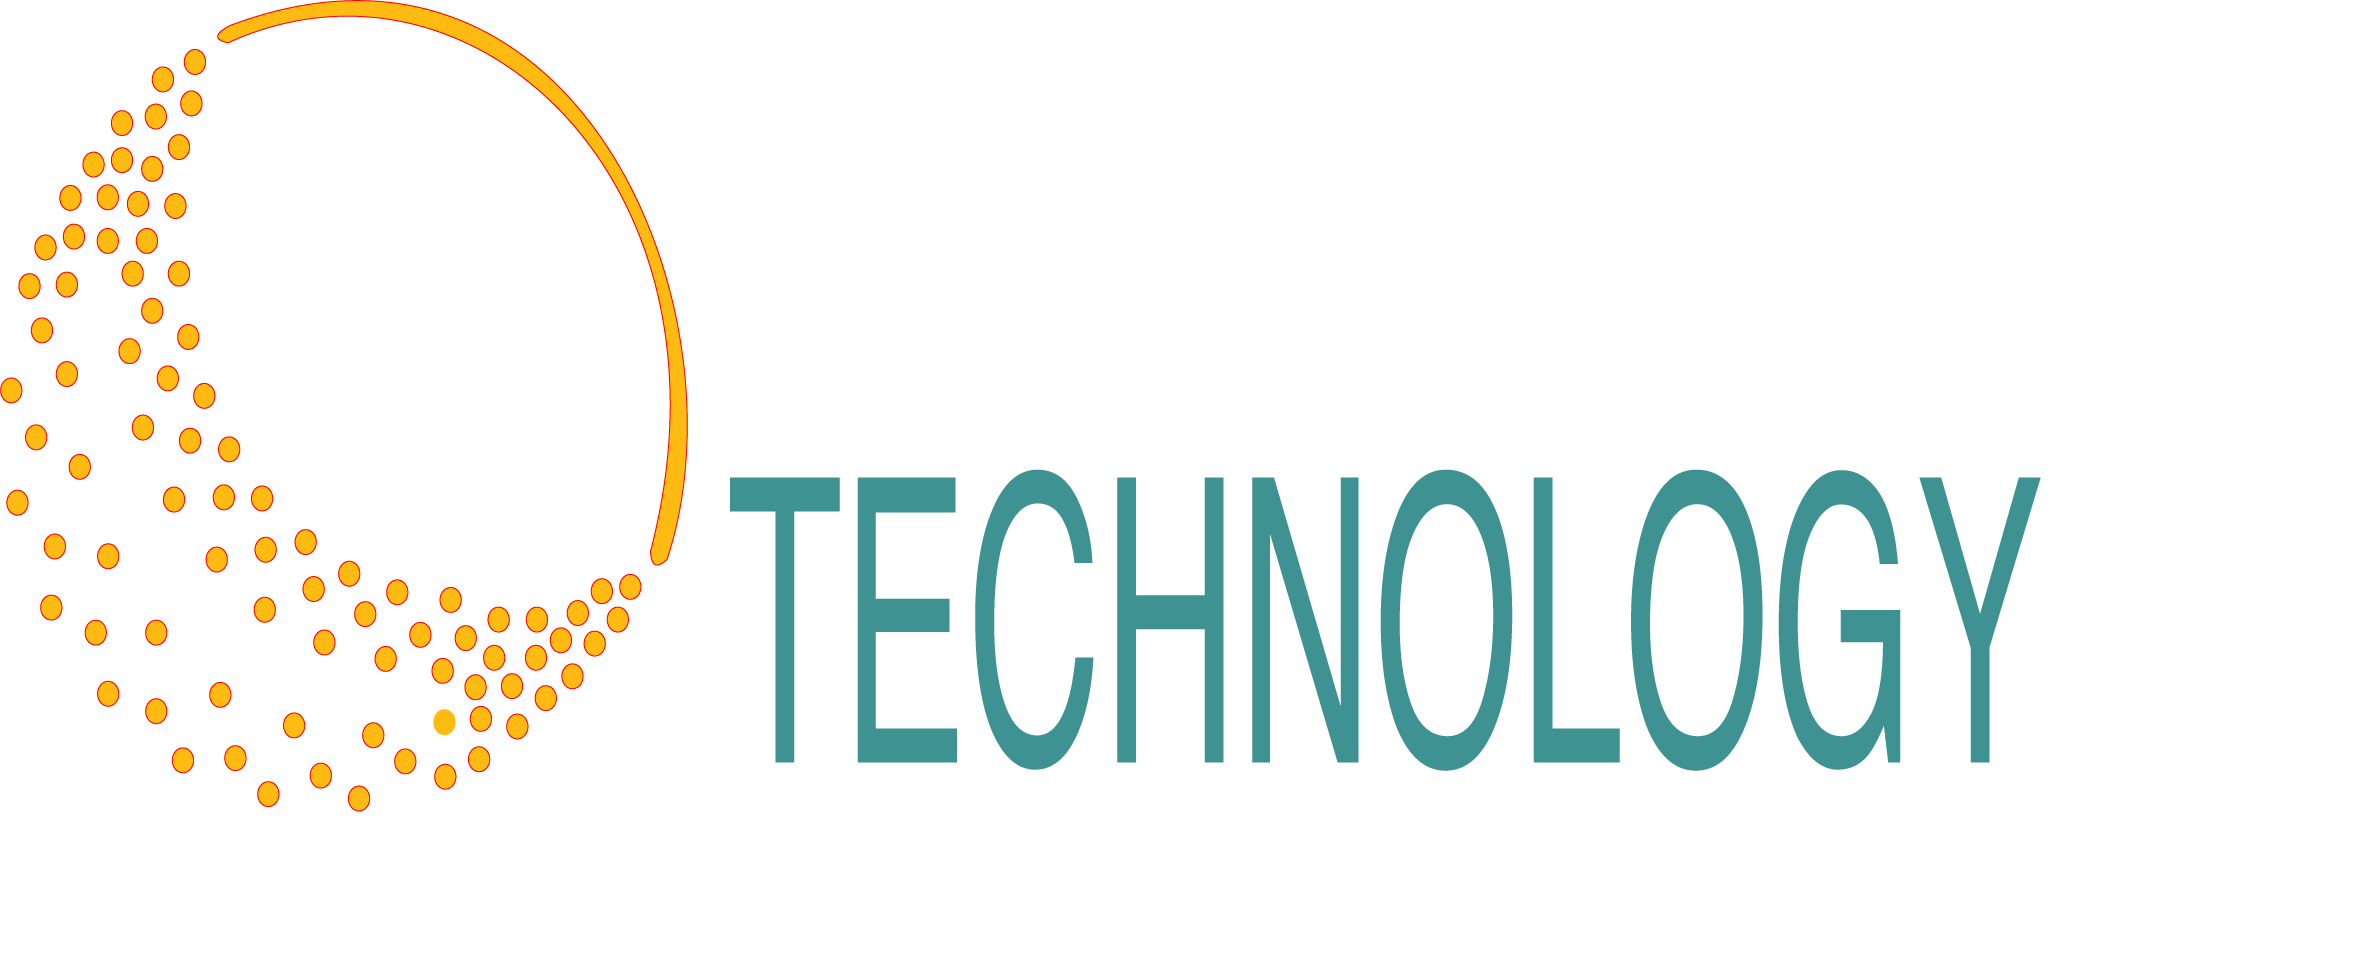 Sleep Easy Technology